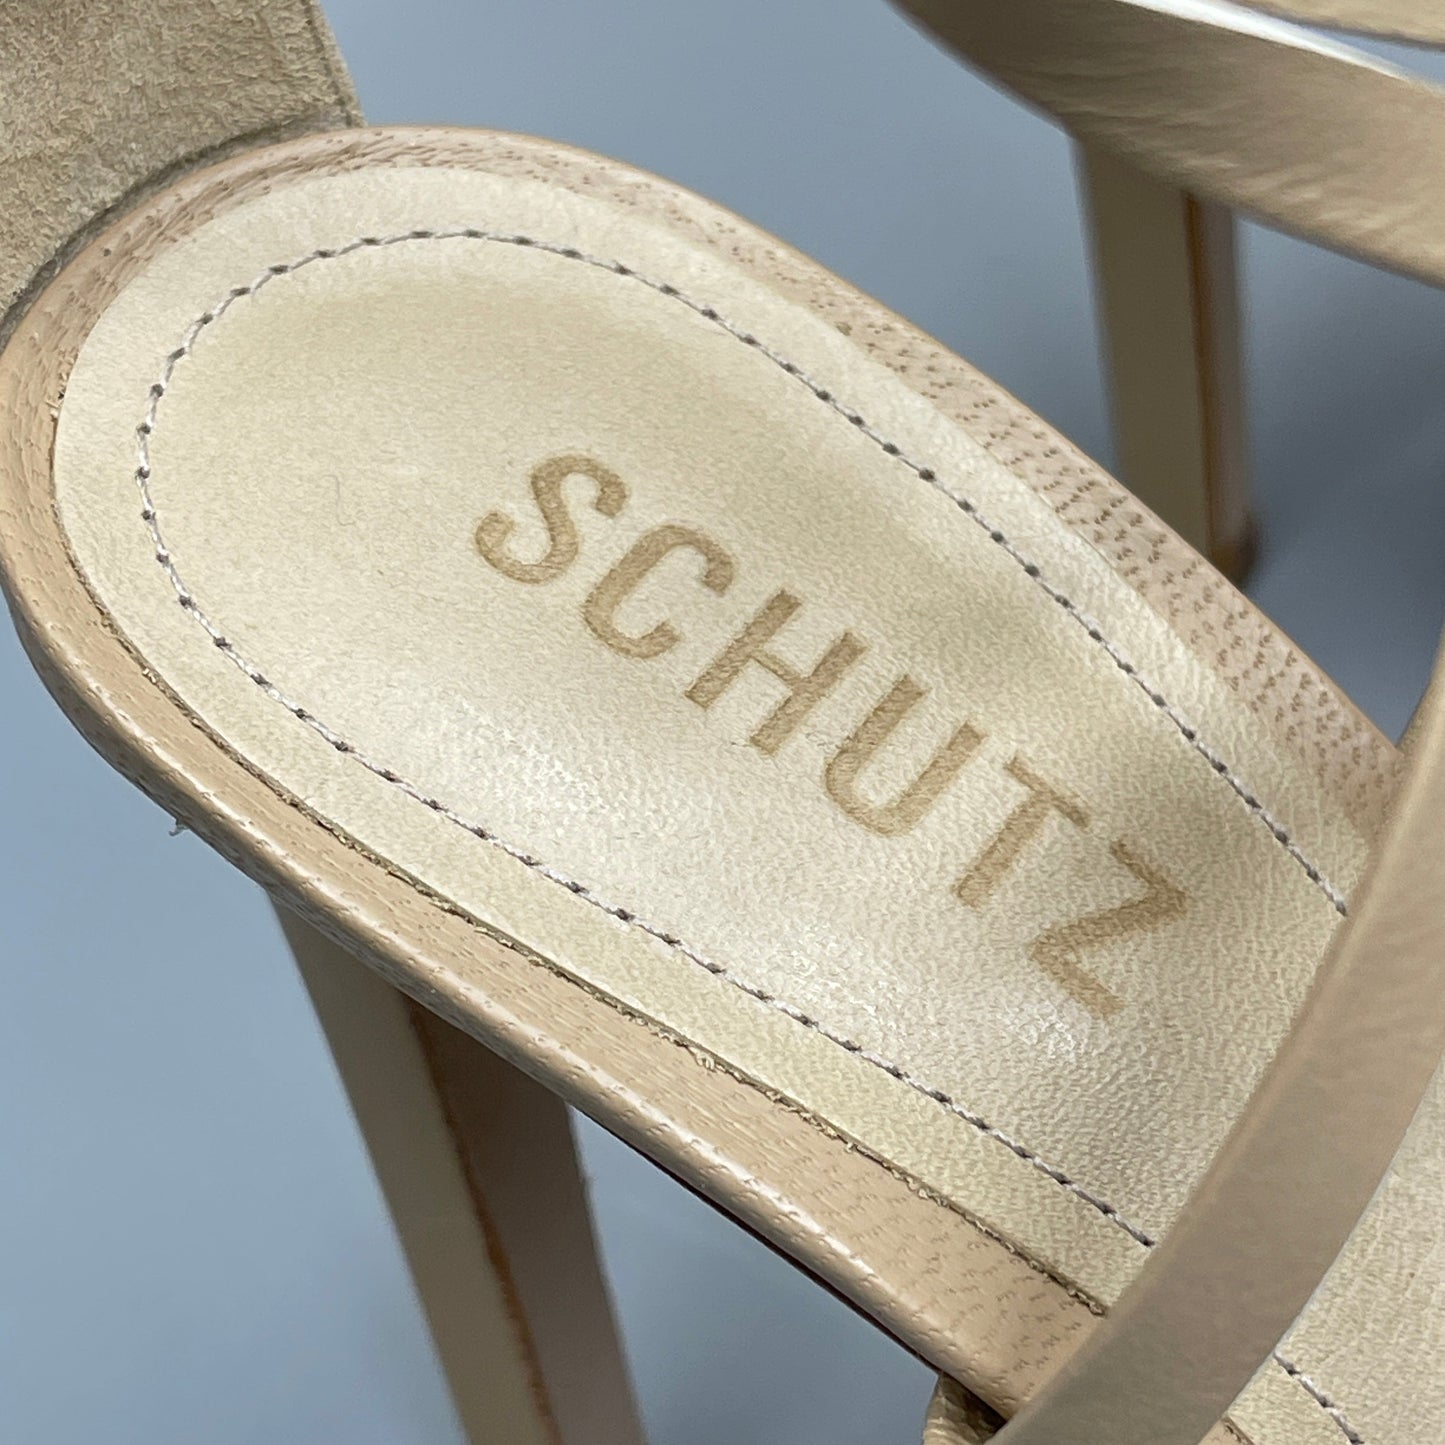 SCHUTZ Bryce Ankle Tie Women's Leather High Heel Sandal Light Nude Sz 10.5B (New)